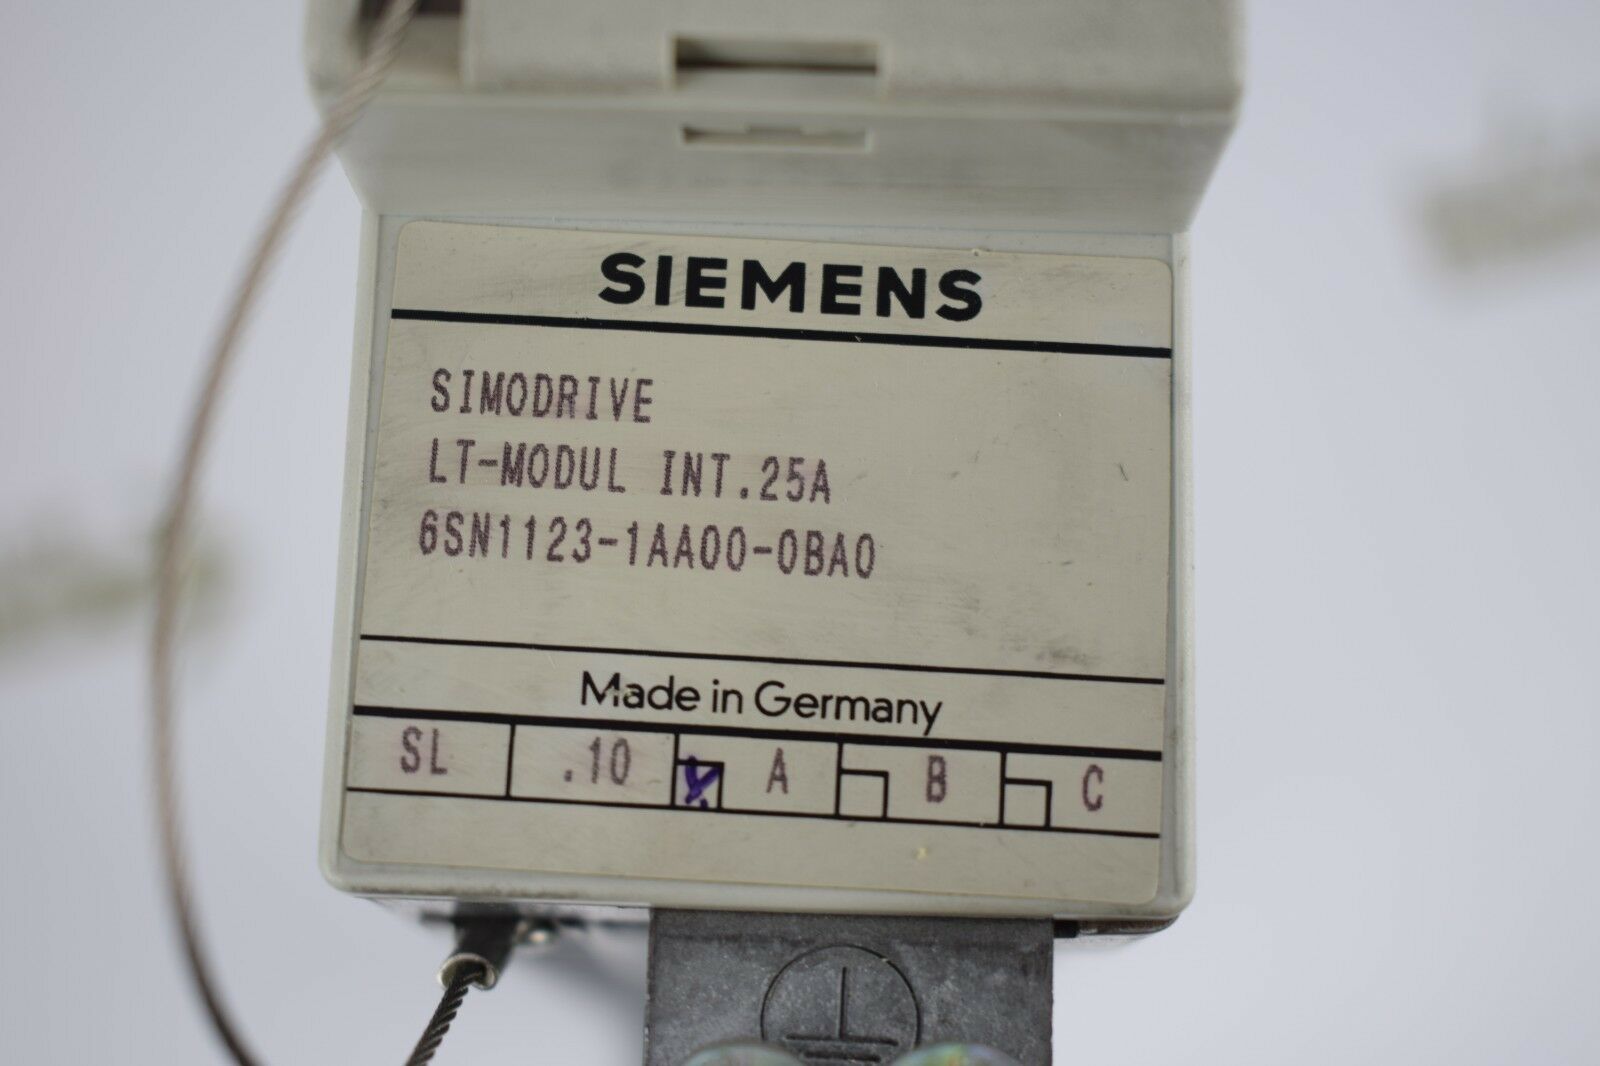 Siemens simodrive 611 Leistungsmodul 6SN1123-1AA00-0BA0  E. A